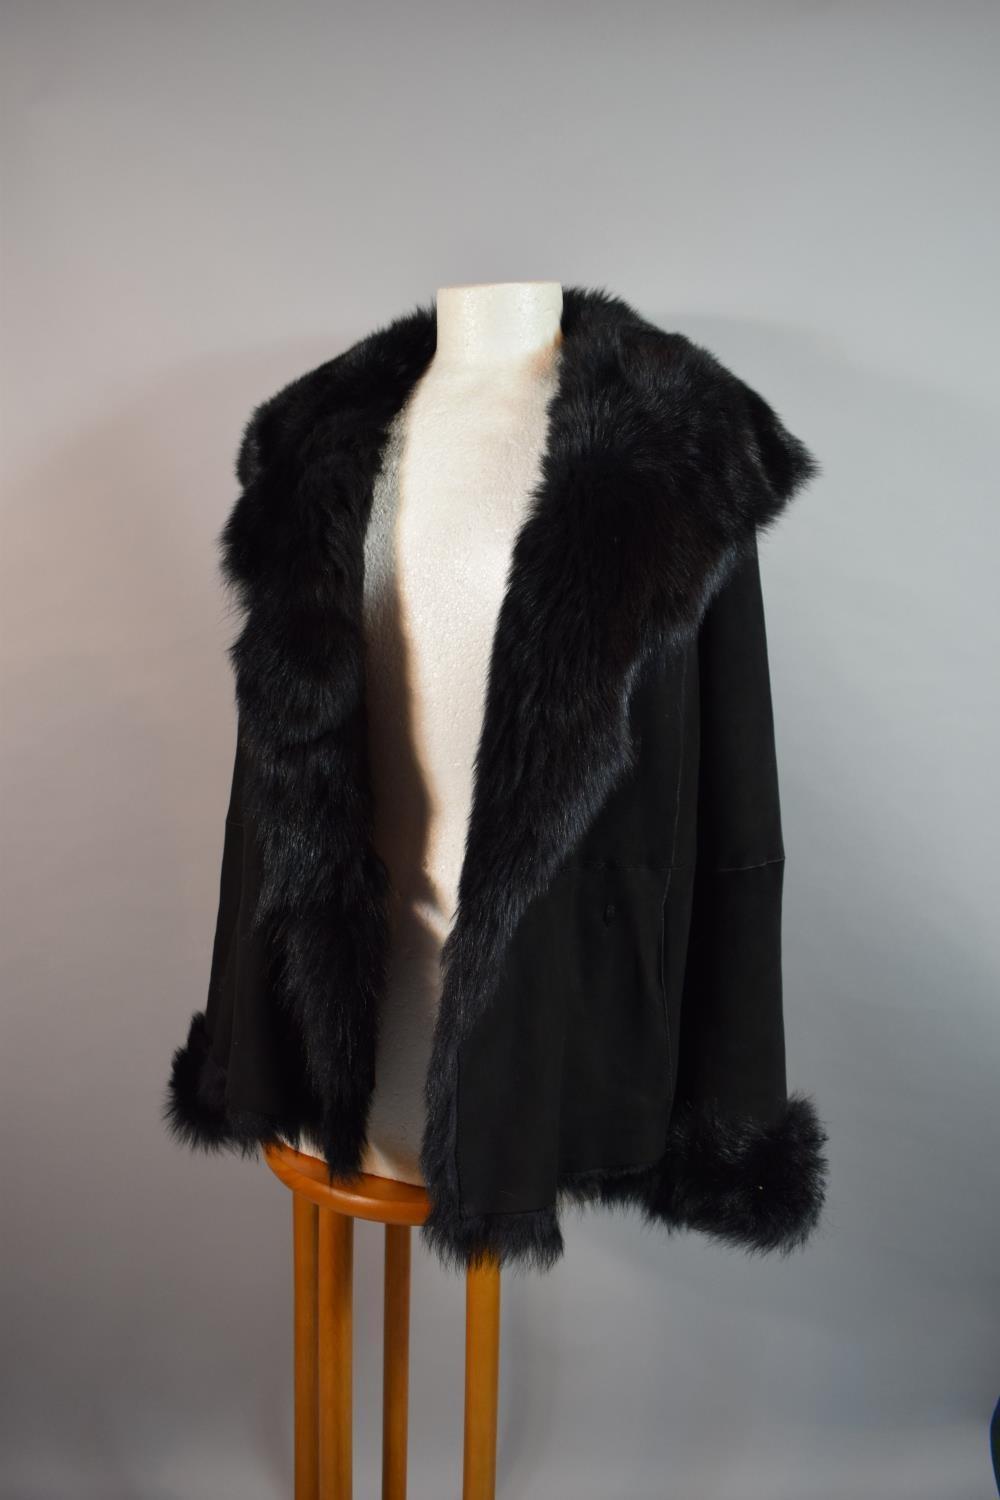 A Fur Lined Sheepskin Designer Jacket by Joseph, EU Size 38 - Image 2 of 3